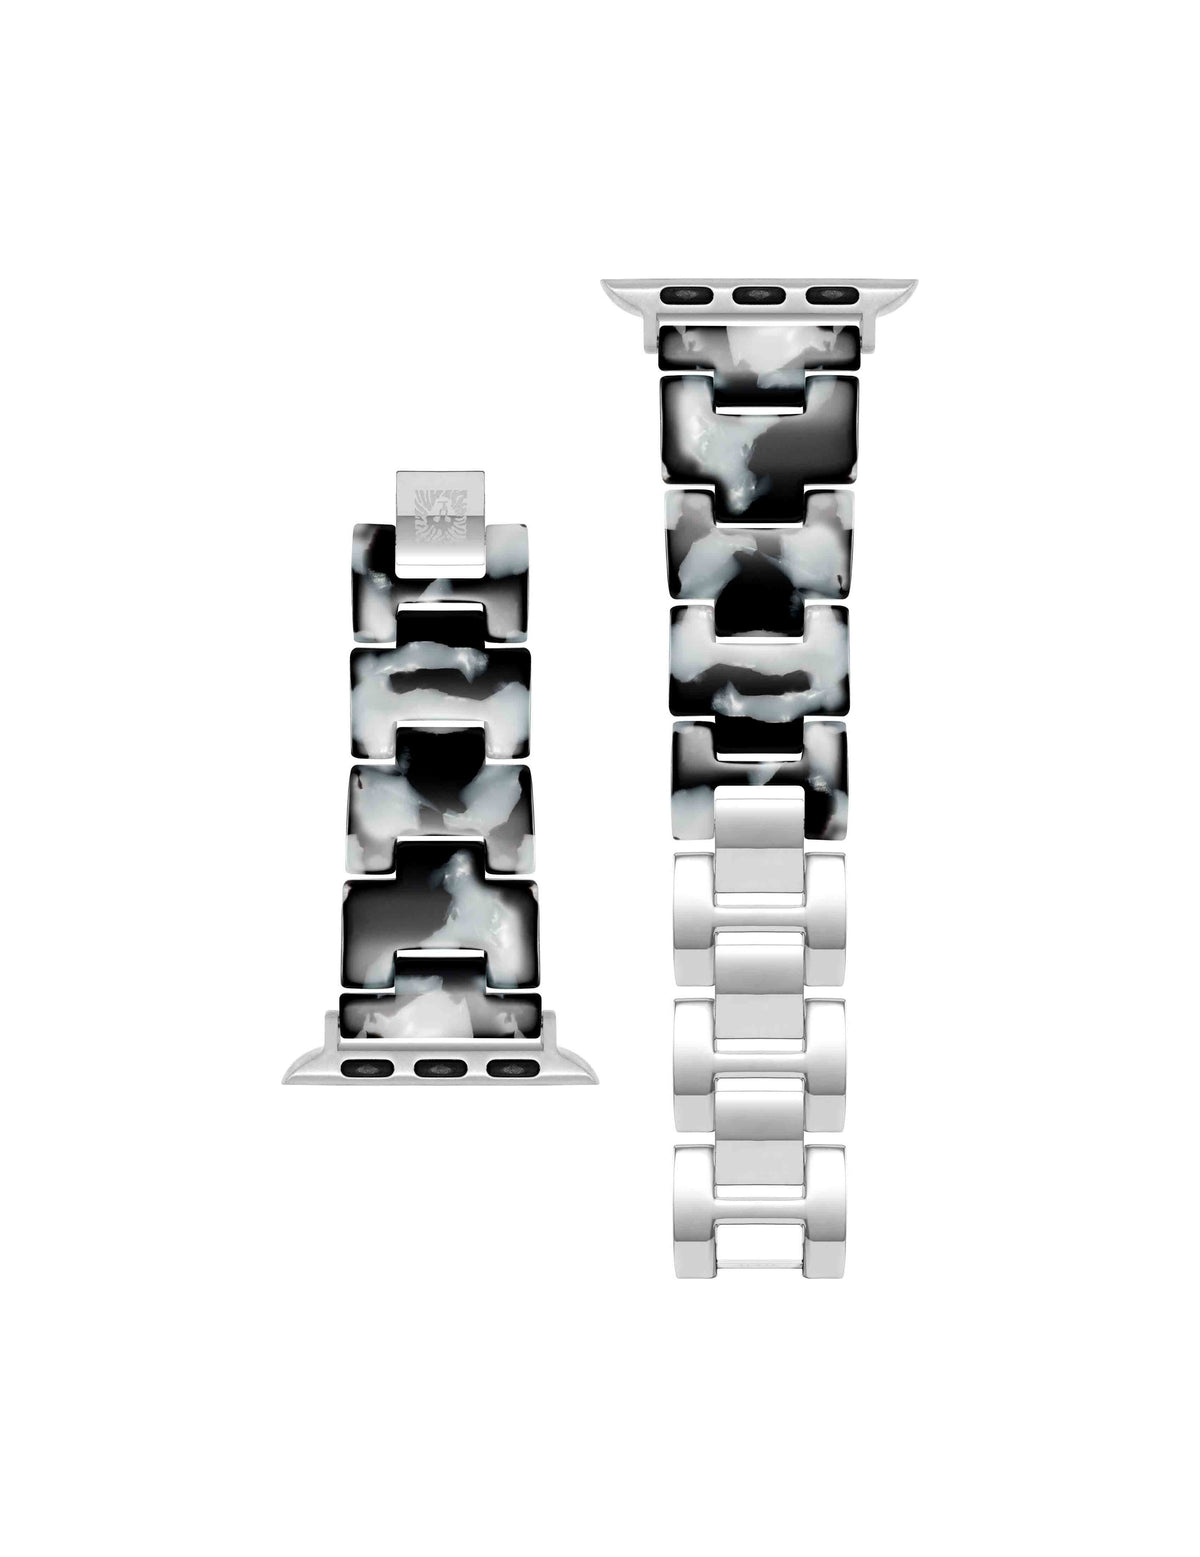 Anne Klein  Marbleized Acetate Bracelet Band for Apple Watch®